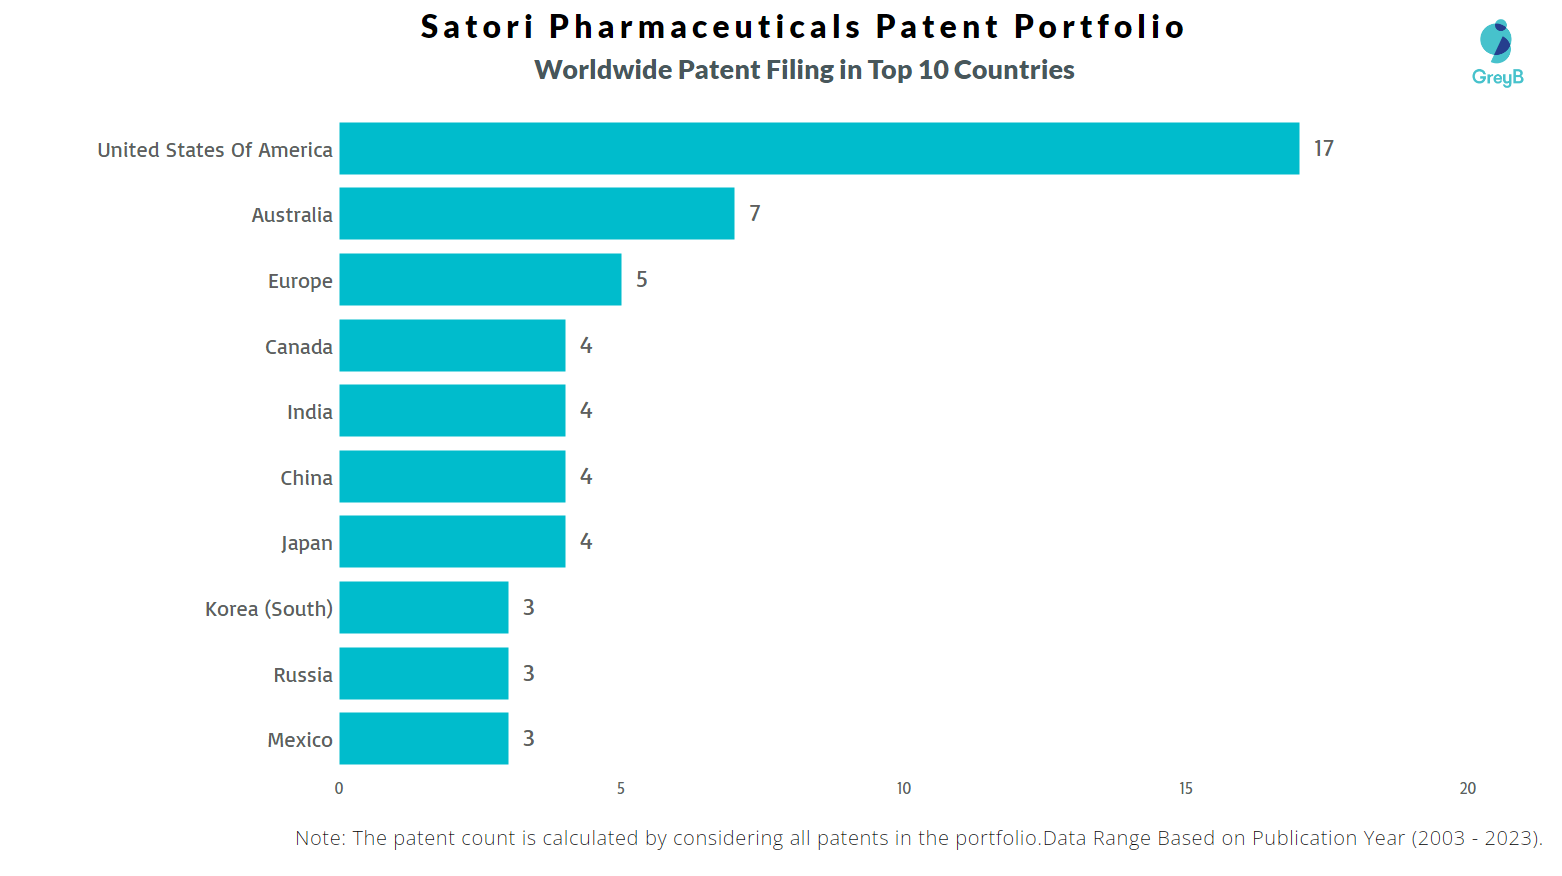 Satori Pharmaceuticals Worldwide Patent Filing